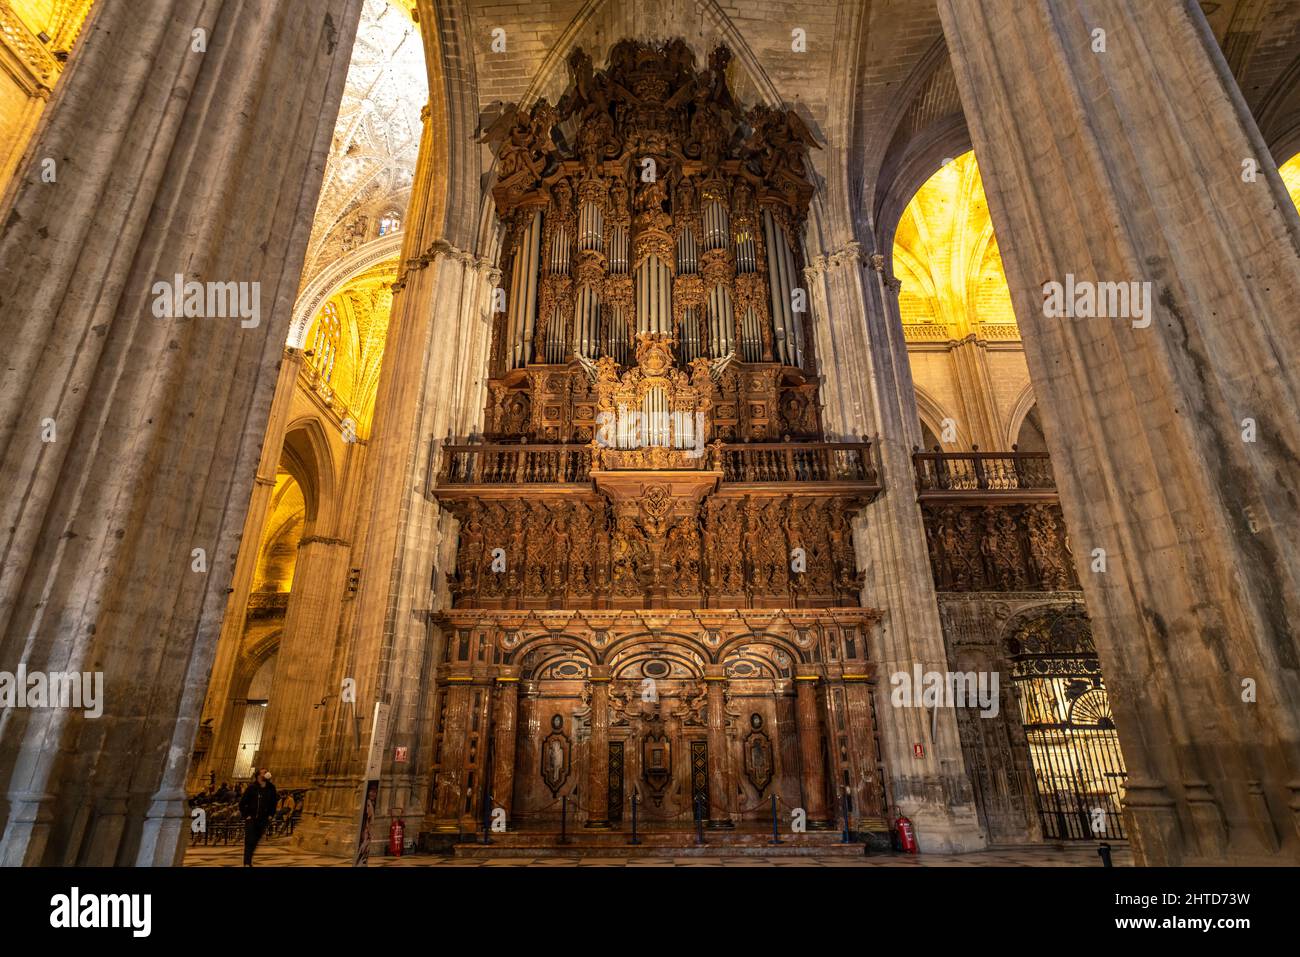 Kirchenorgel im Innenraum der Kathedrale Santa María de la Sede in Sevilla, Andalusien, Spanien | Kathedrale von Sevilla Kirche Santa Maria del See oder Stockfoto